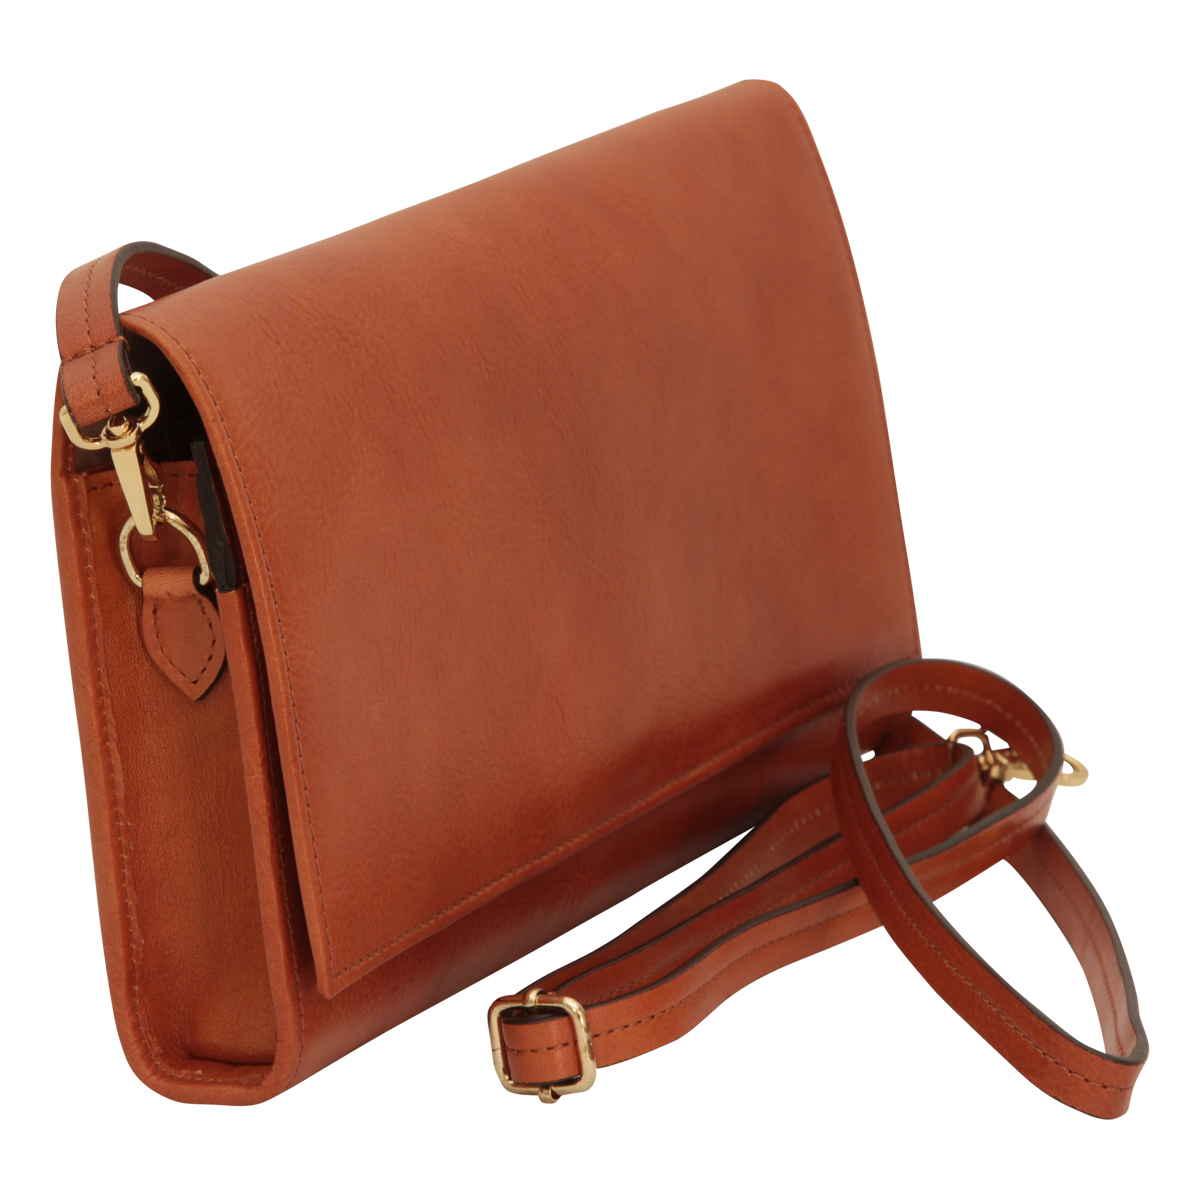 Full grain calfskin shoulder bag . Brown coloniale | 556889CO UK | Old Angler Firenze